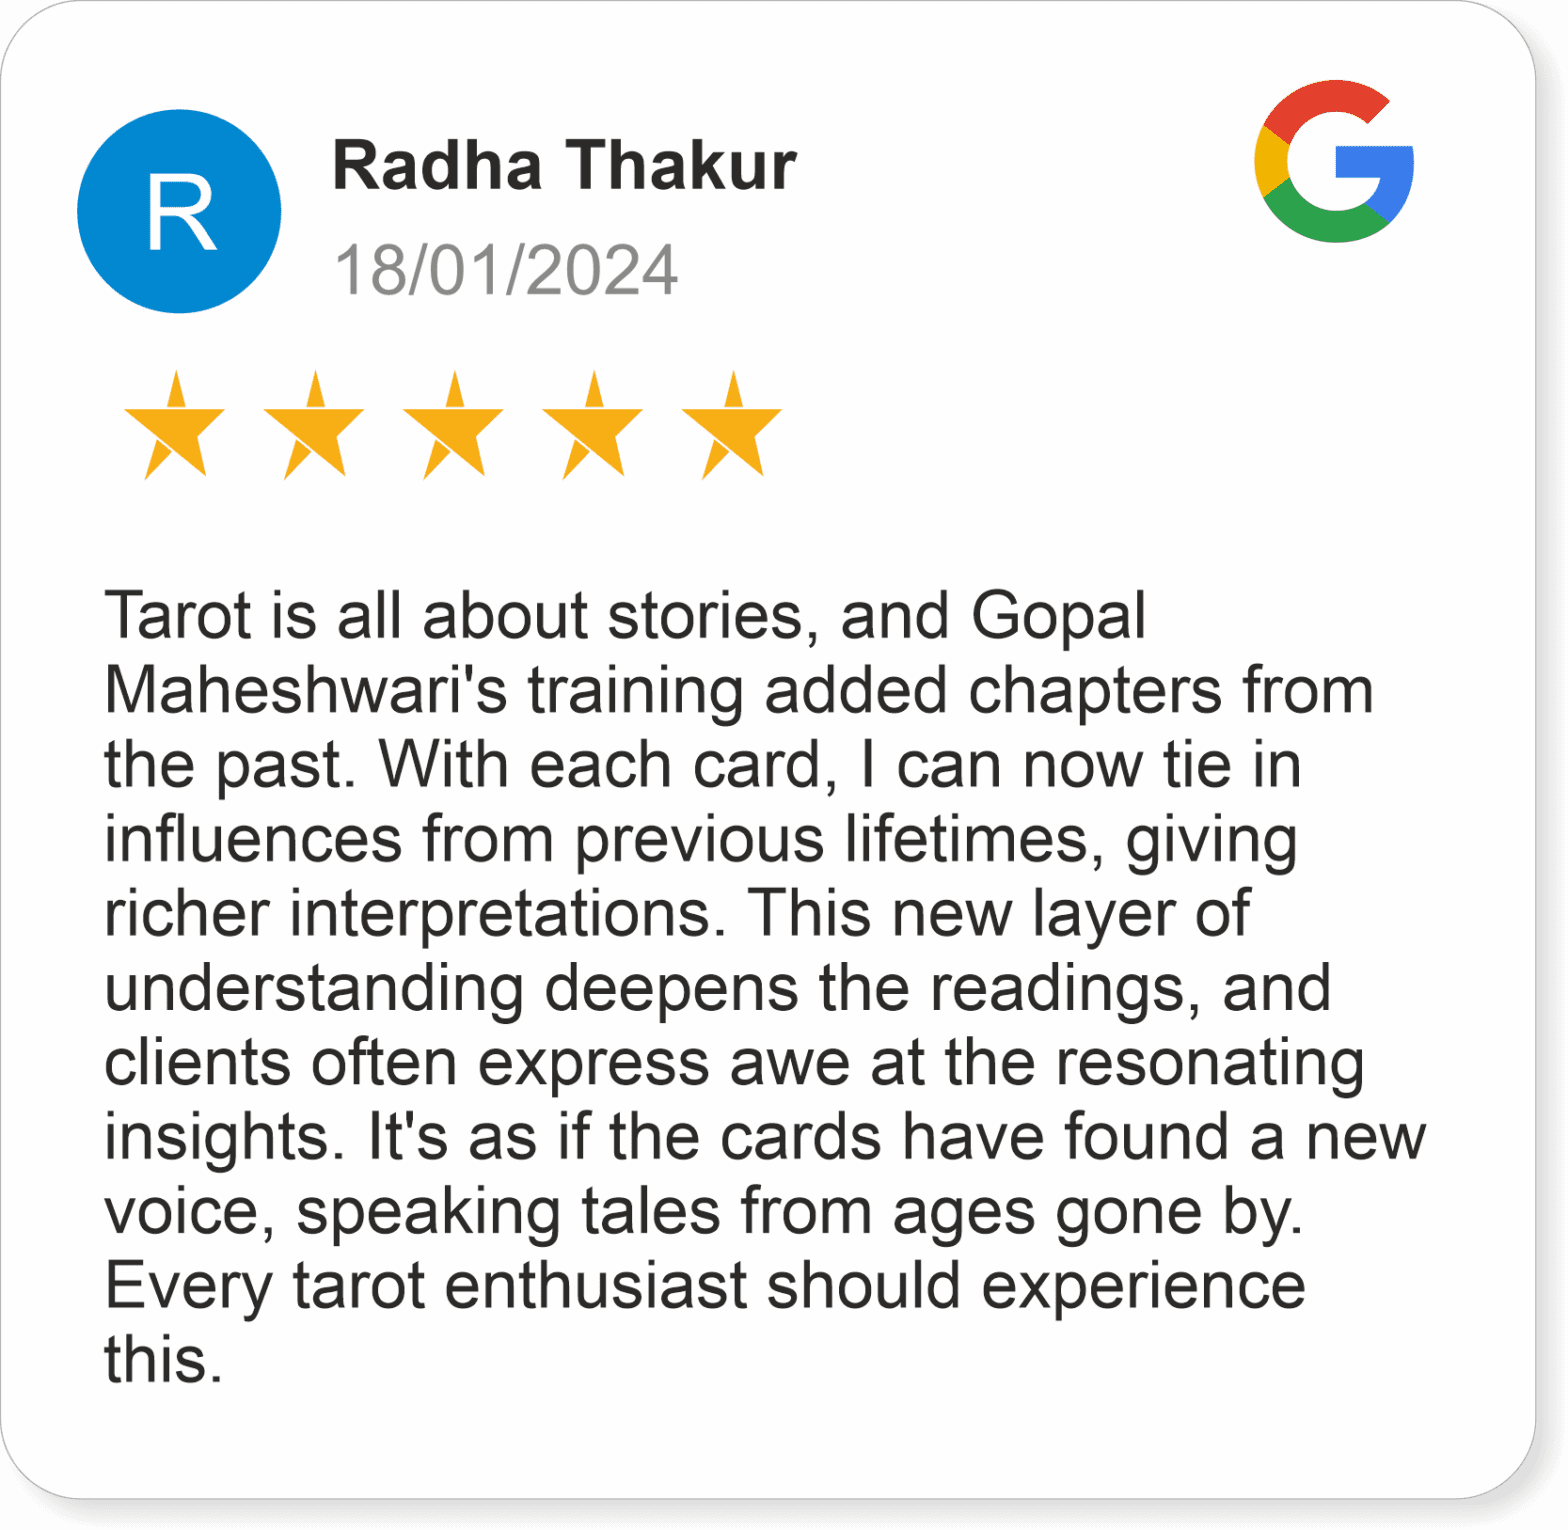 Radha Thakur